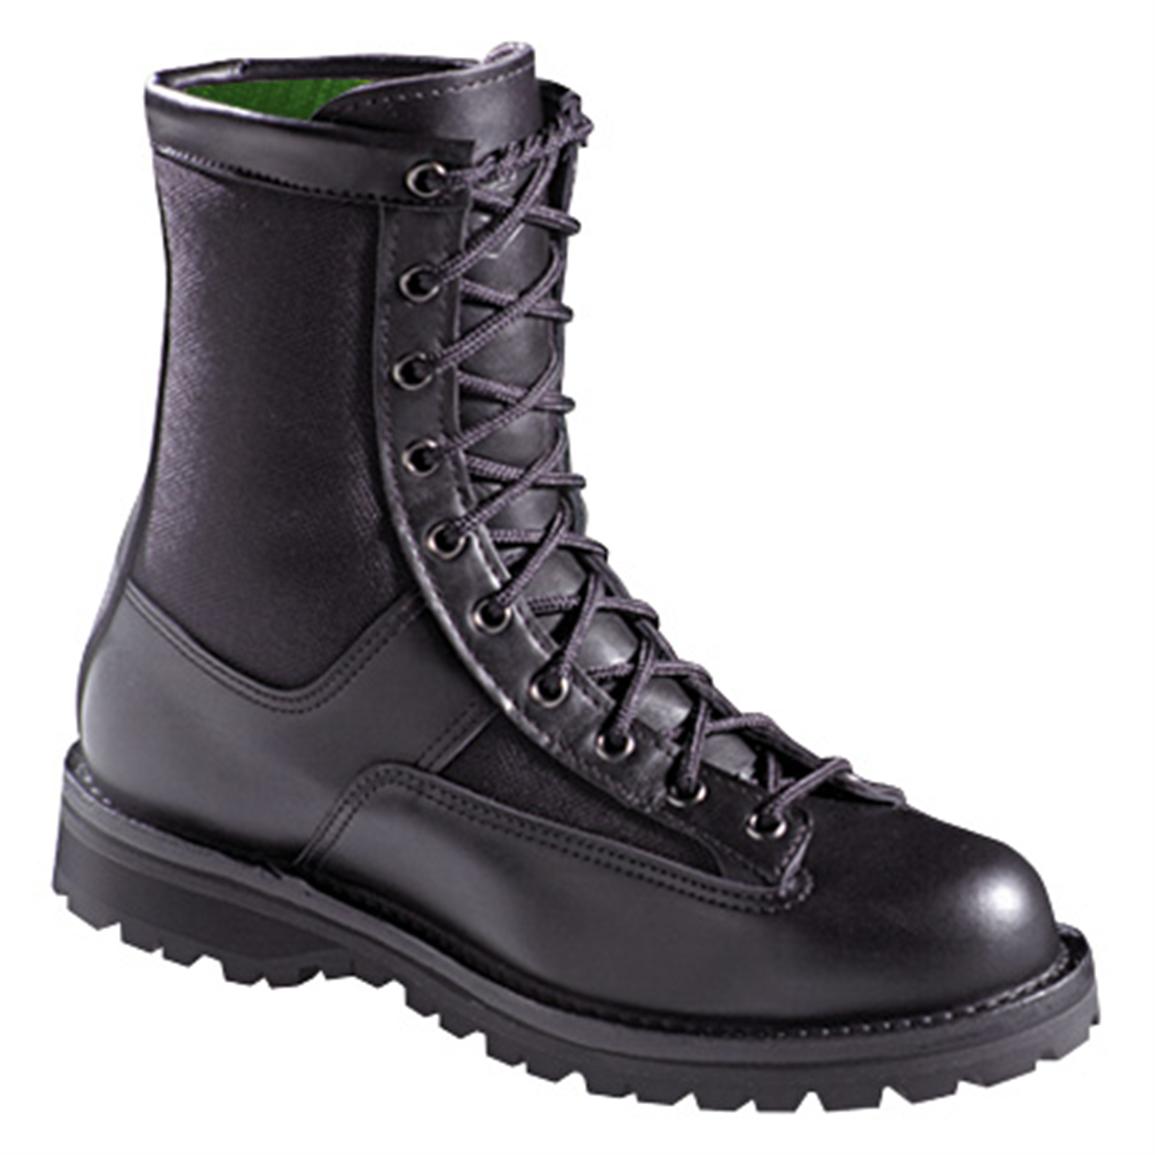 Men's Danner® 8" Acadia 400-gram Thinsulate Insulated Combat Boots, Black